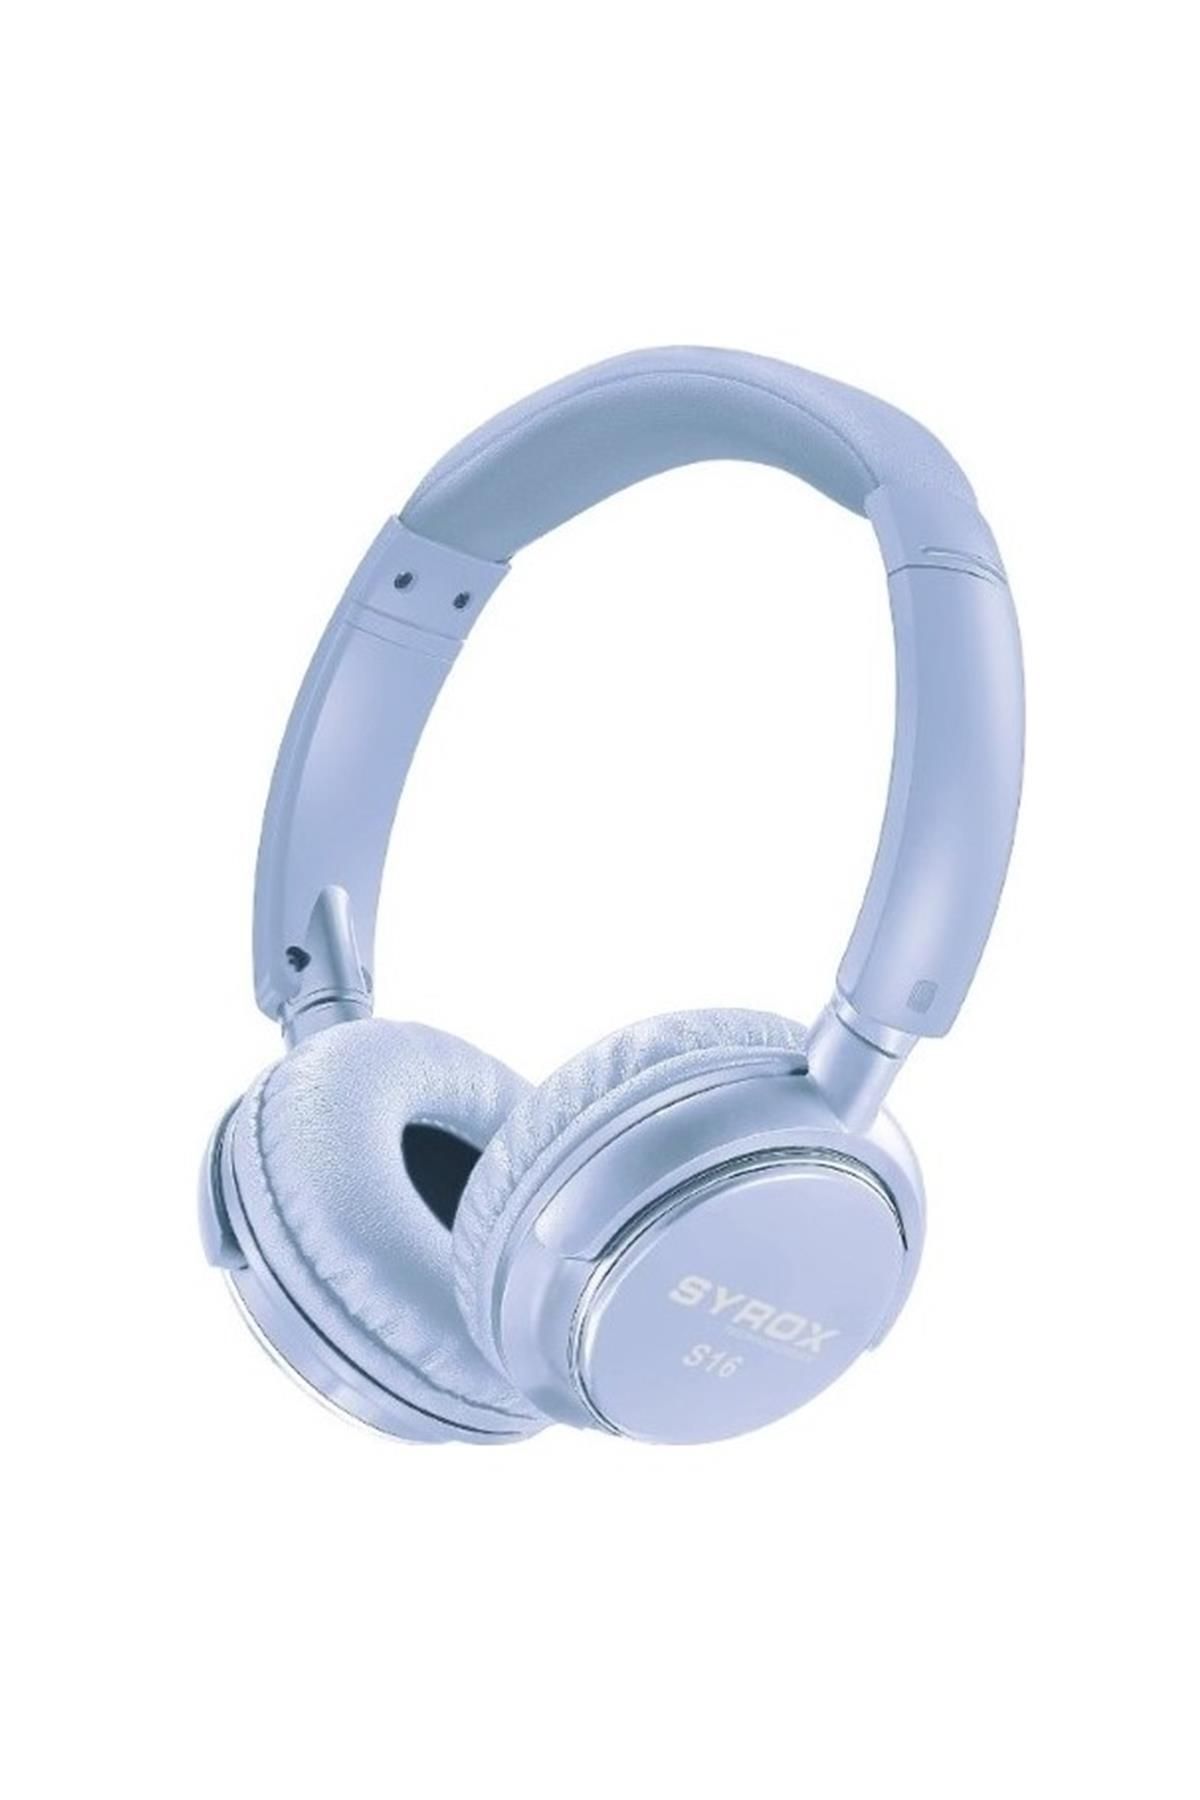 Syrox S16 Kablosuz Hafıza Kartlı Bluetooth Kulak Üstü Kulaklık